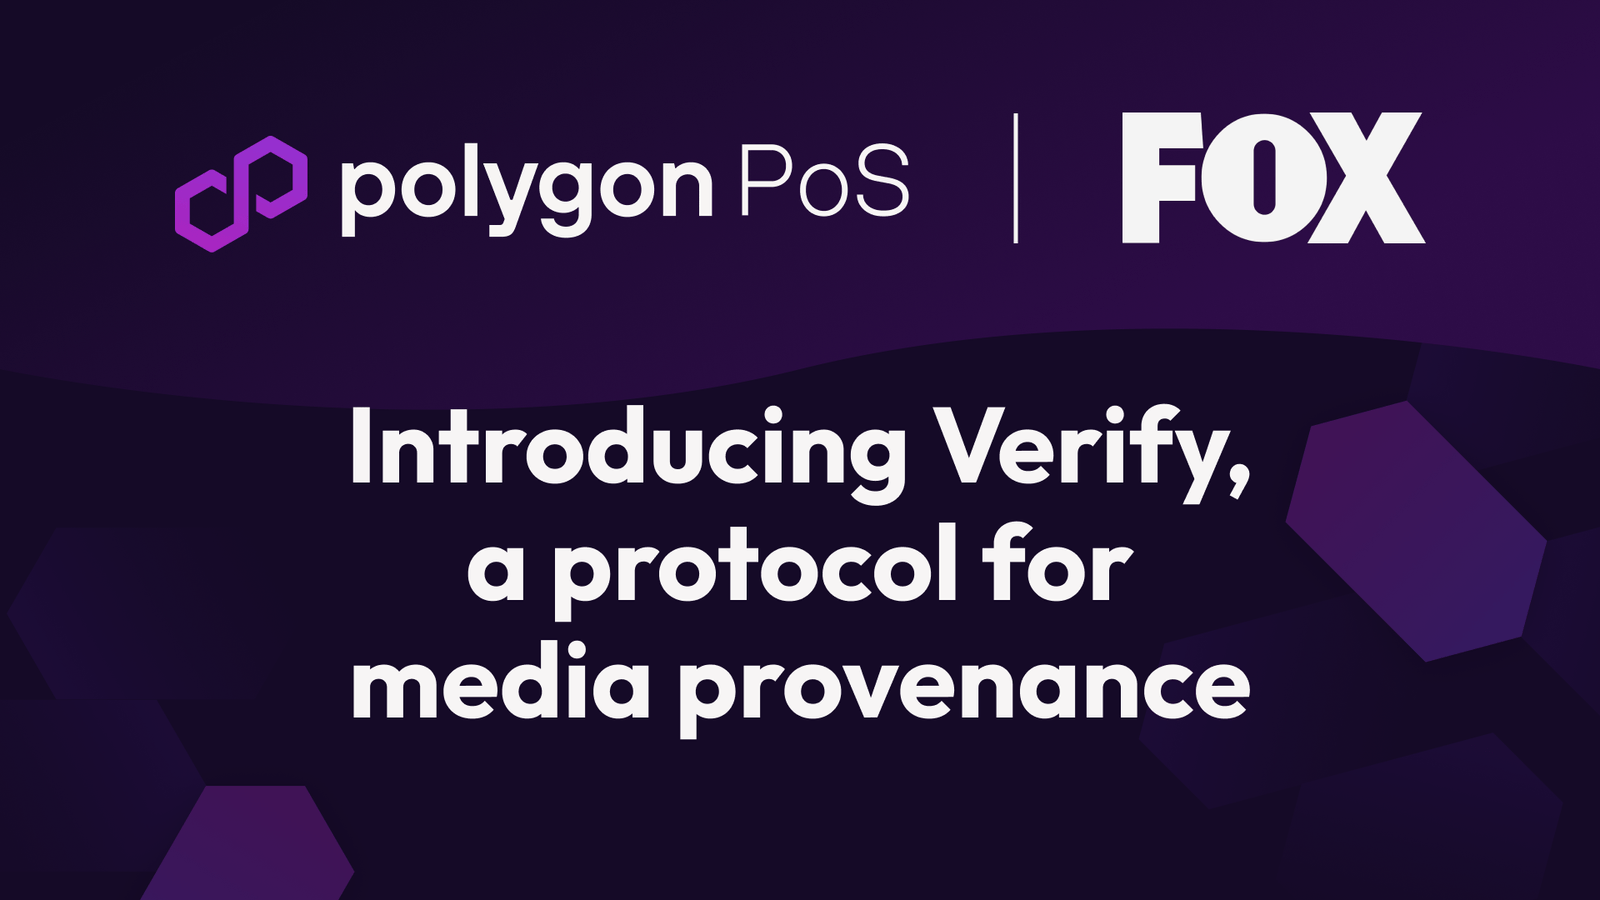 Fox Corporation Introduces Verify Protocol Built on Polygon PoS for Content Verification